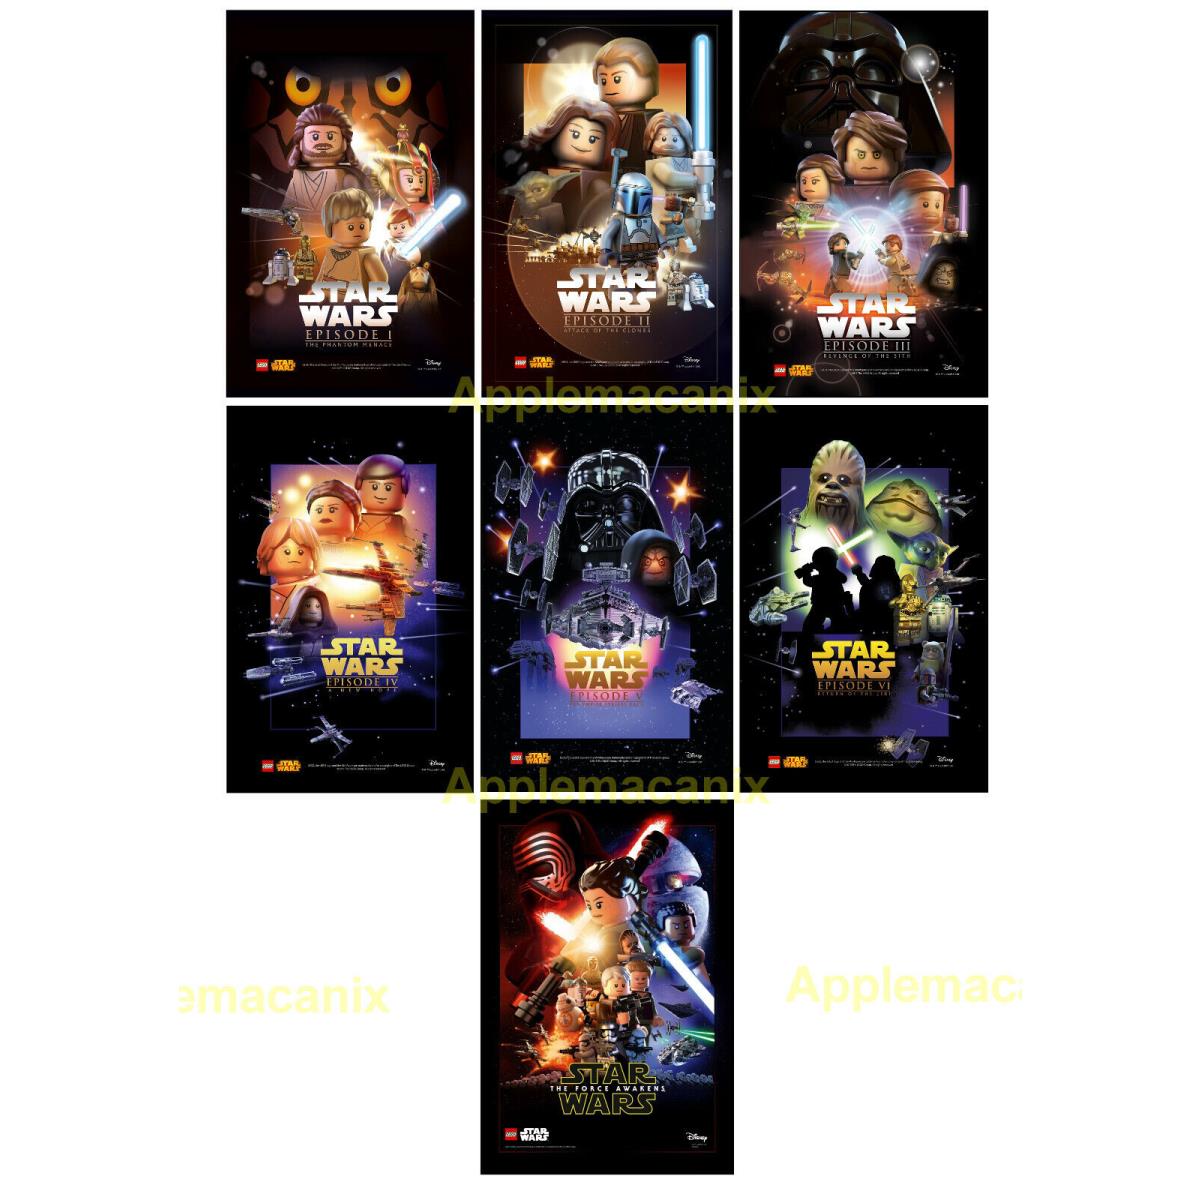 Lego Star Wars Episode I II Iii IV V VI FA 7 Promo Poster Set 2015 16 x 20